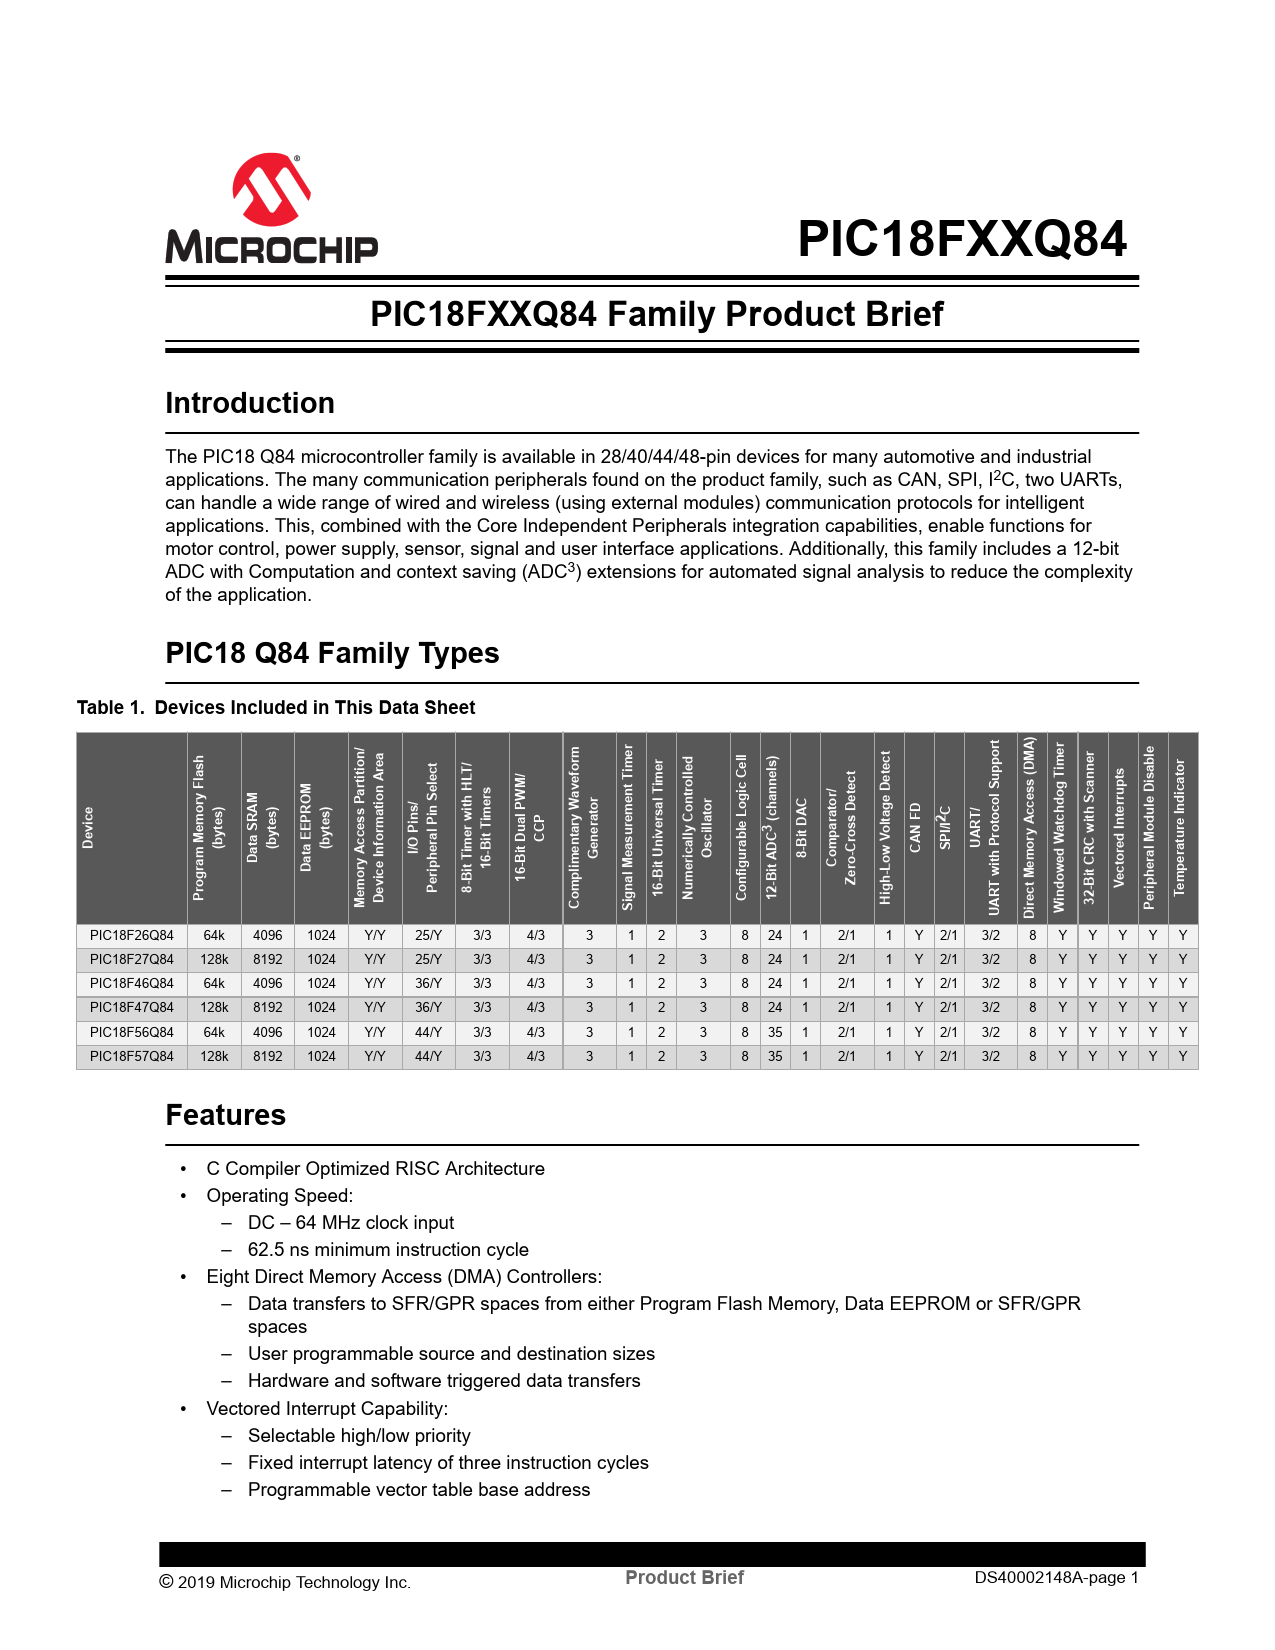 Product Brief PIC18FXXQ84 Microchip - Просмотр и загрузка